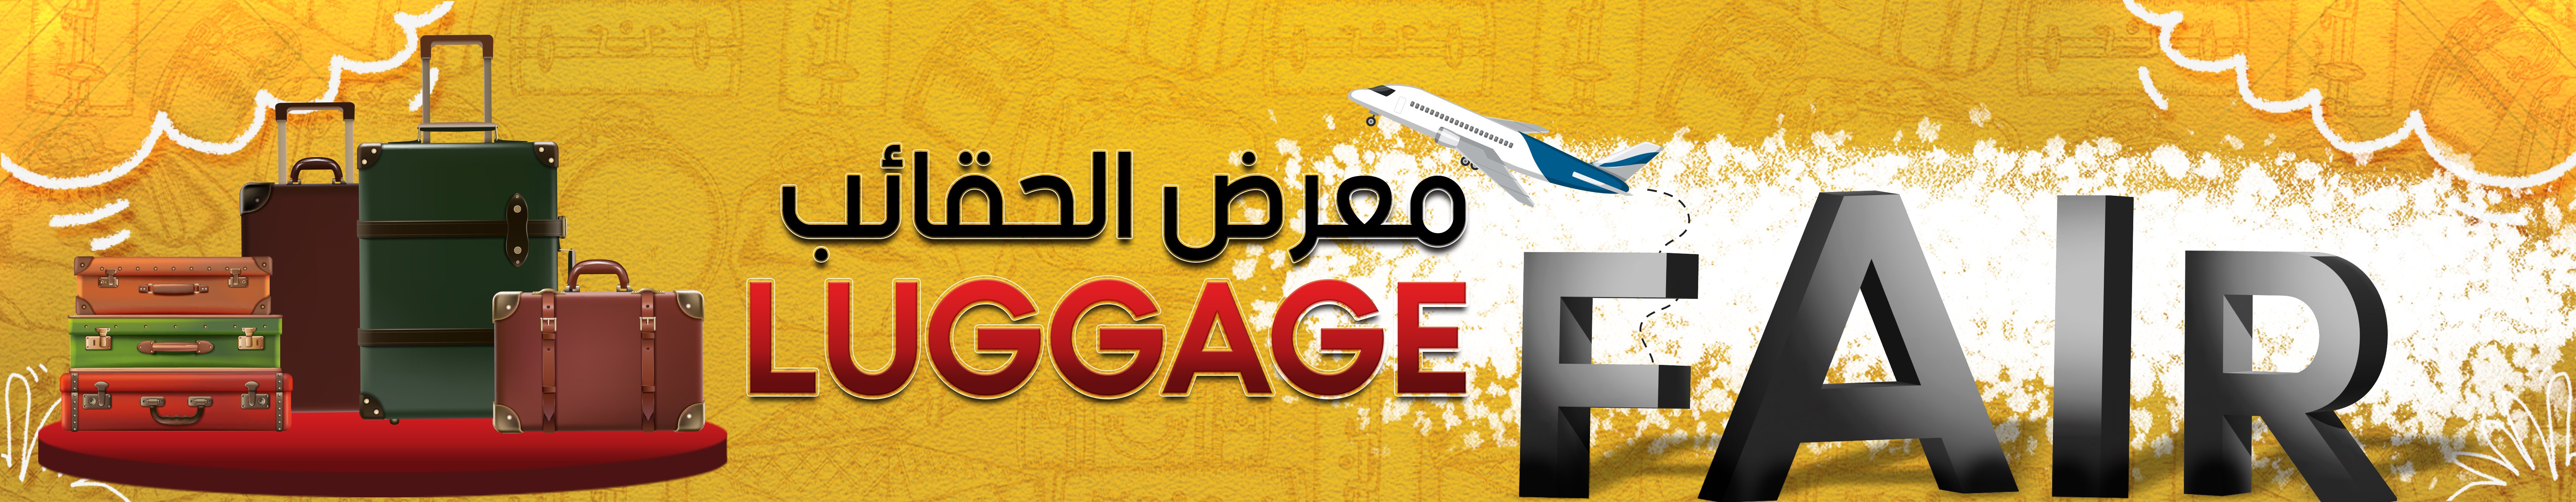 07.12.2022-luggage-banner.jpg